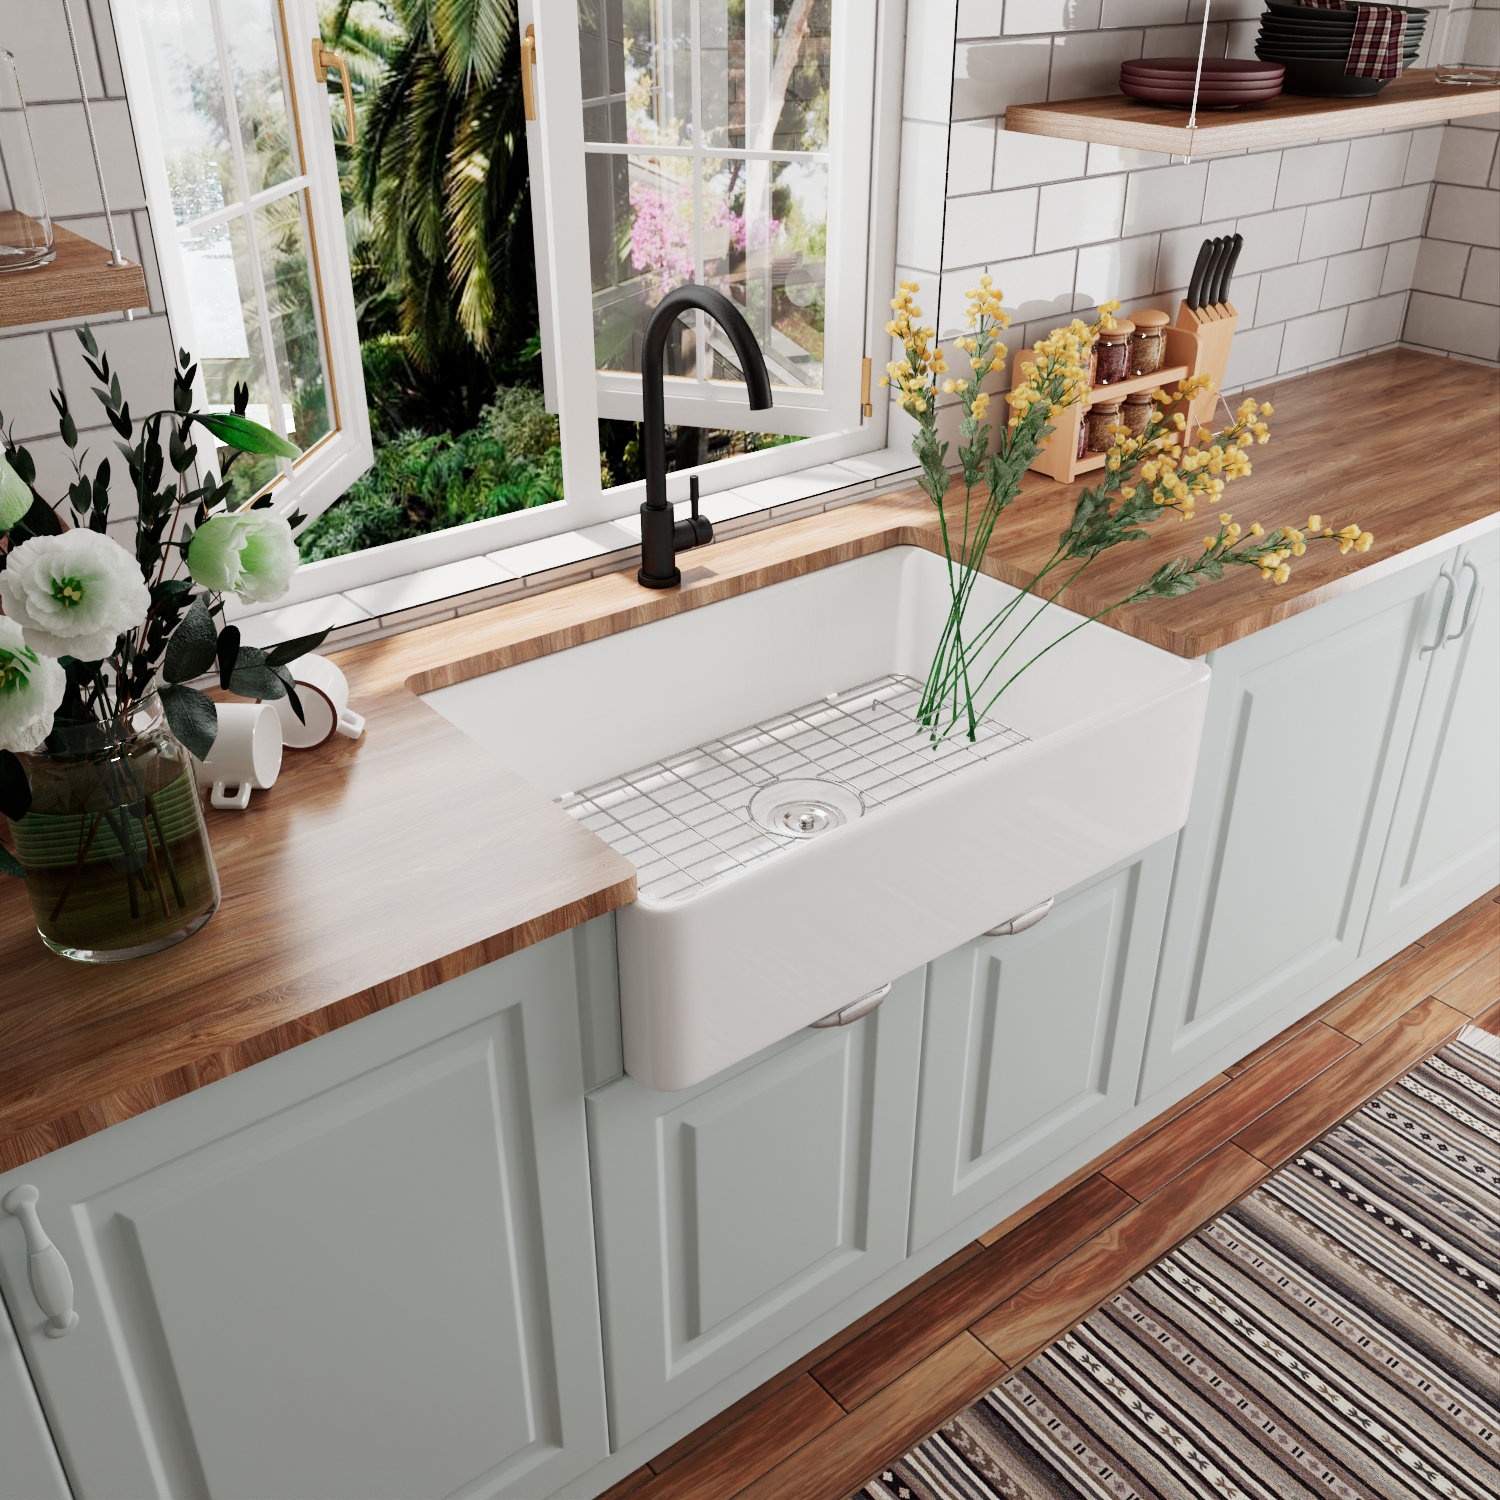 https://visualhunt.com/photos/23/feast-33-l-x-20-w-farmhouse-kitchen-sink-with-sink-grid-and-basket-strainer.jpg